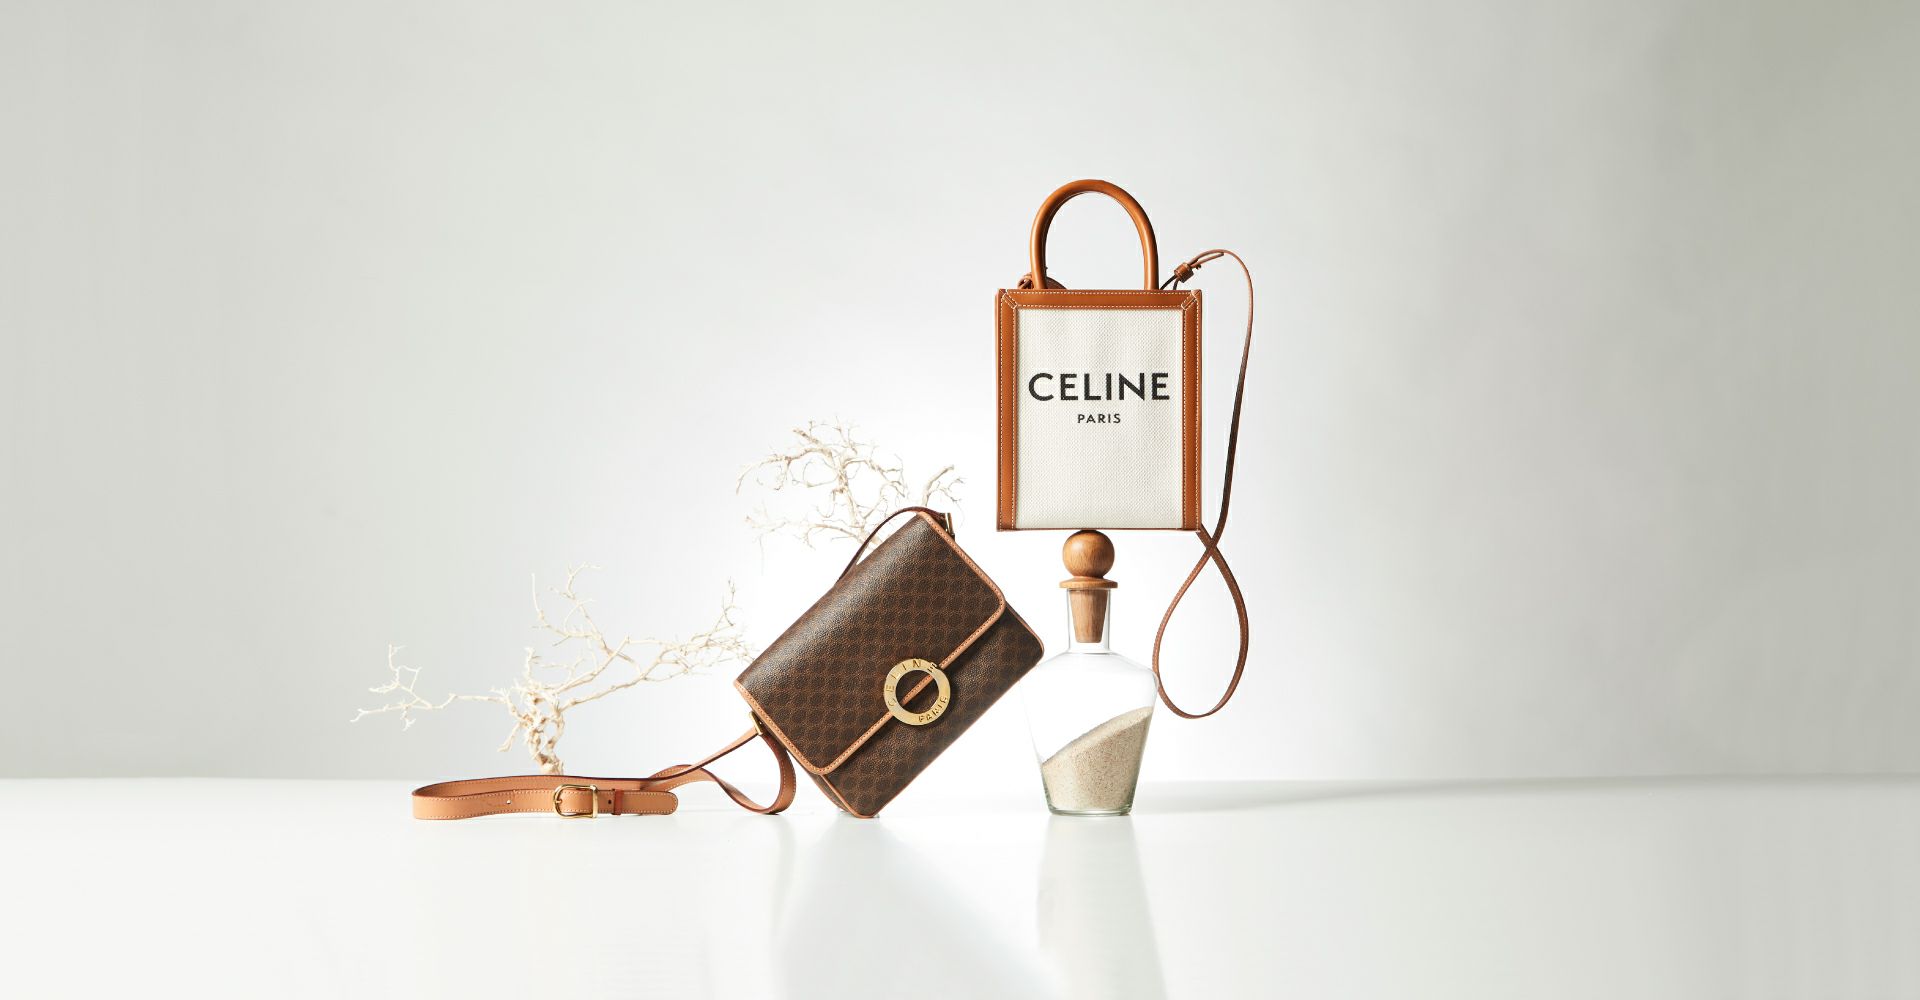 Celine Triomphe Leather Wallet